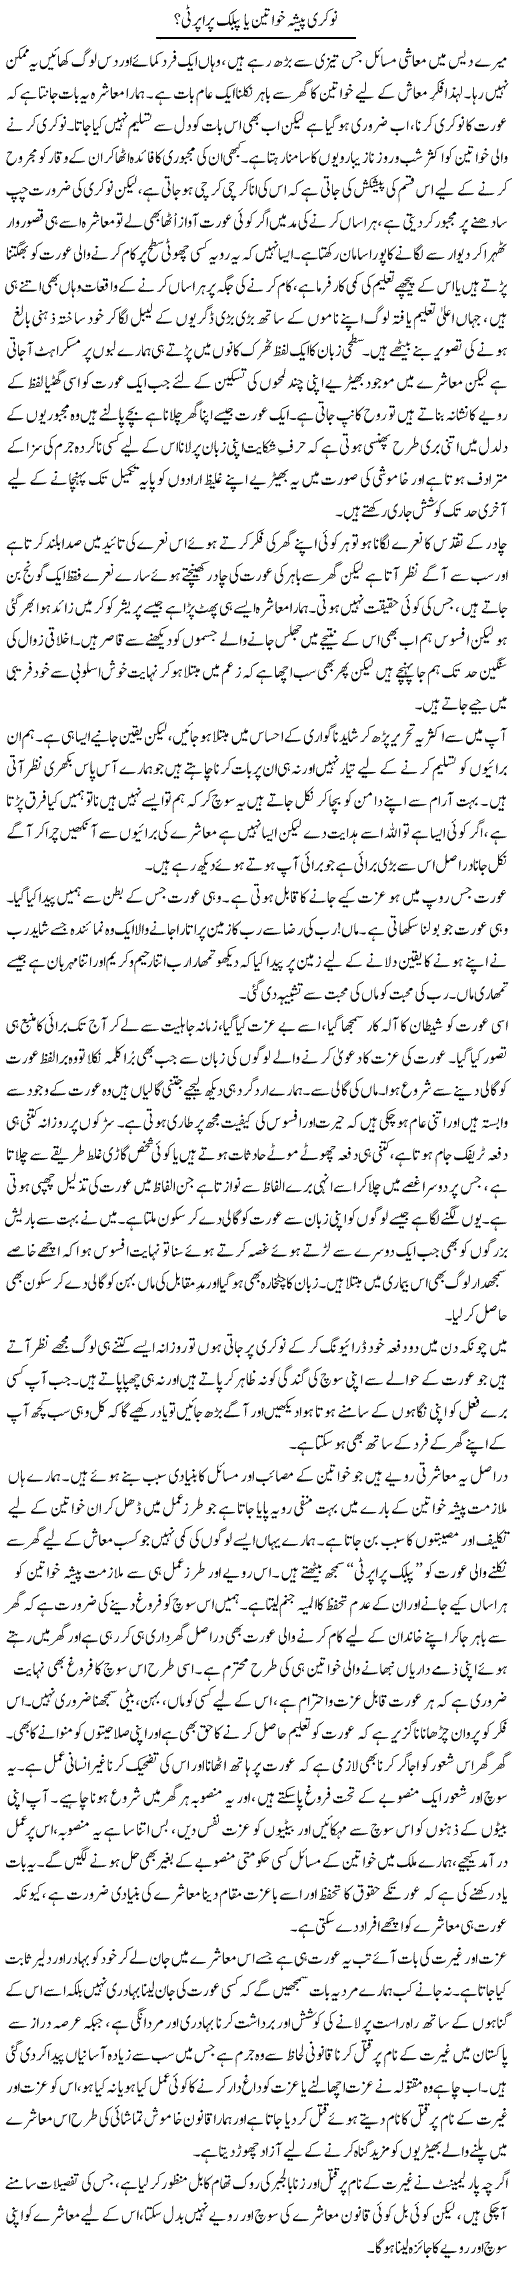 Naukri Pesha Khawateen Ya Public Property? | Sana Ghouri | Daily Urdu Columns